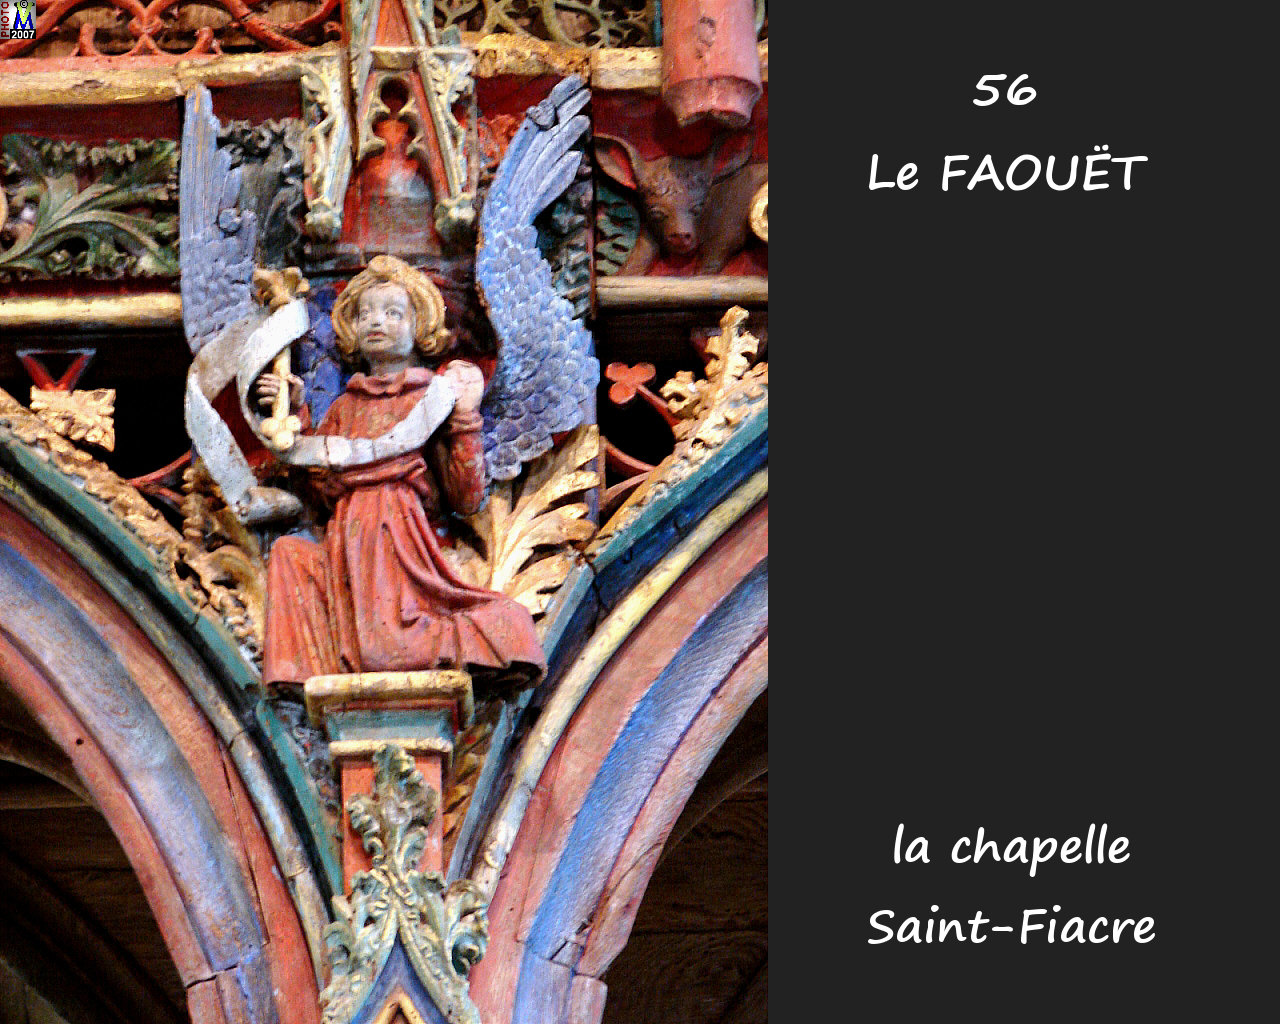 56FAOUET_chapelle-fiacre_226.jpg